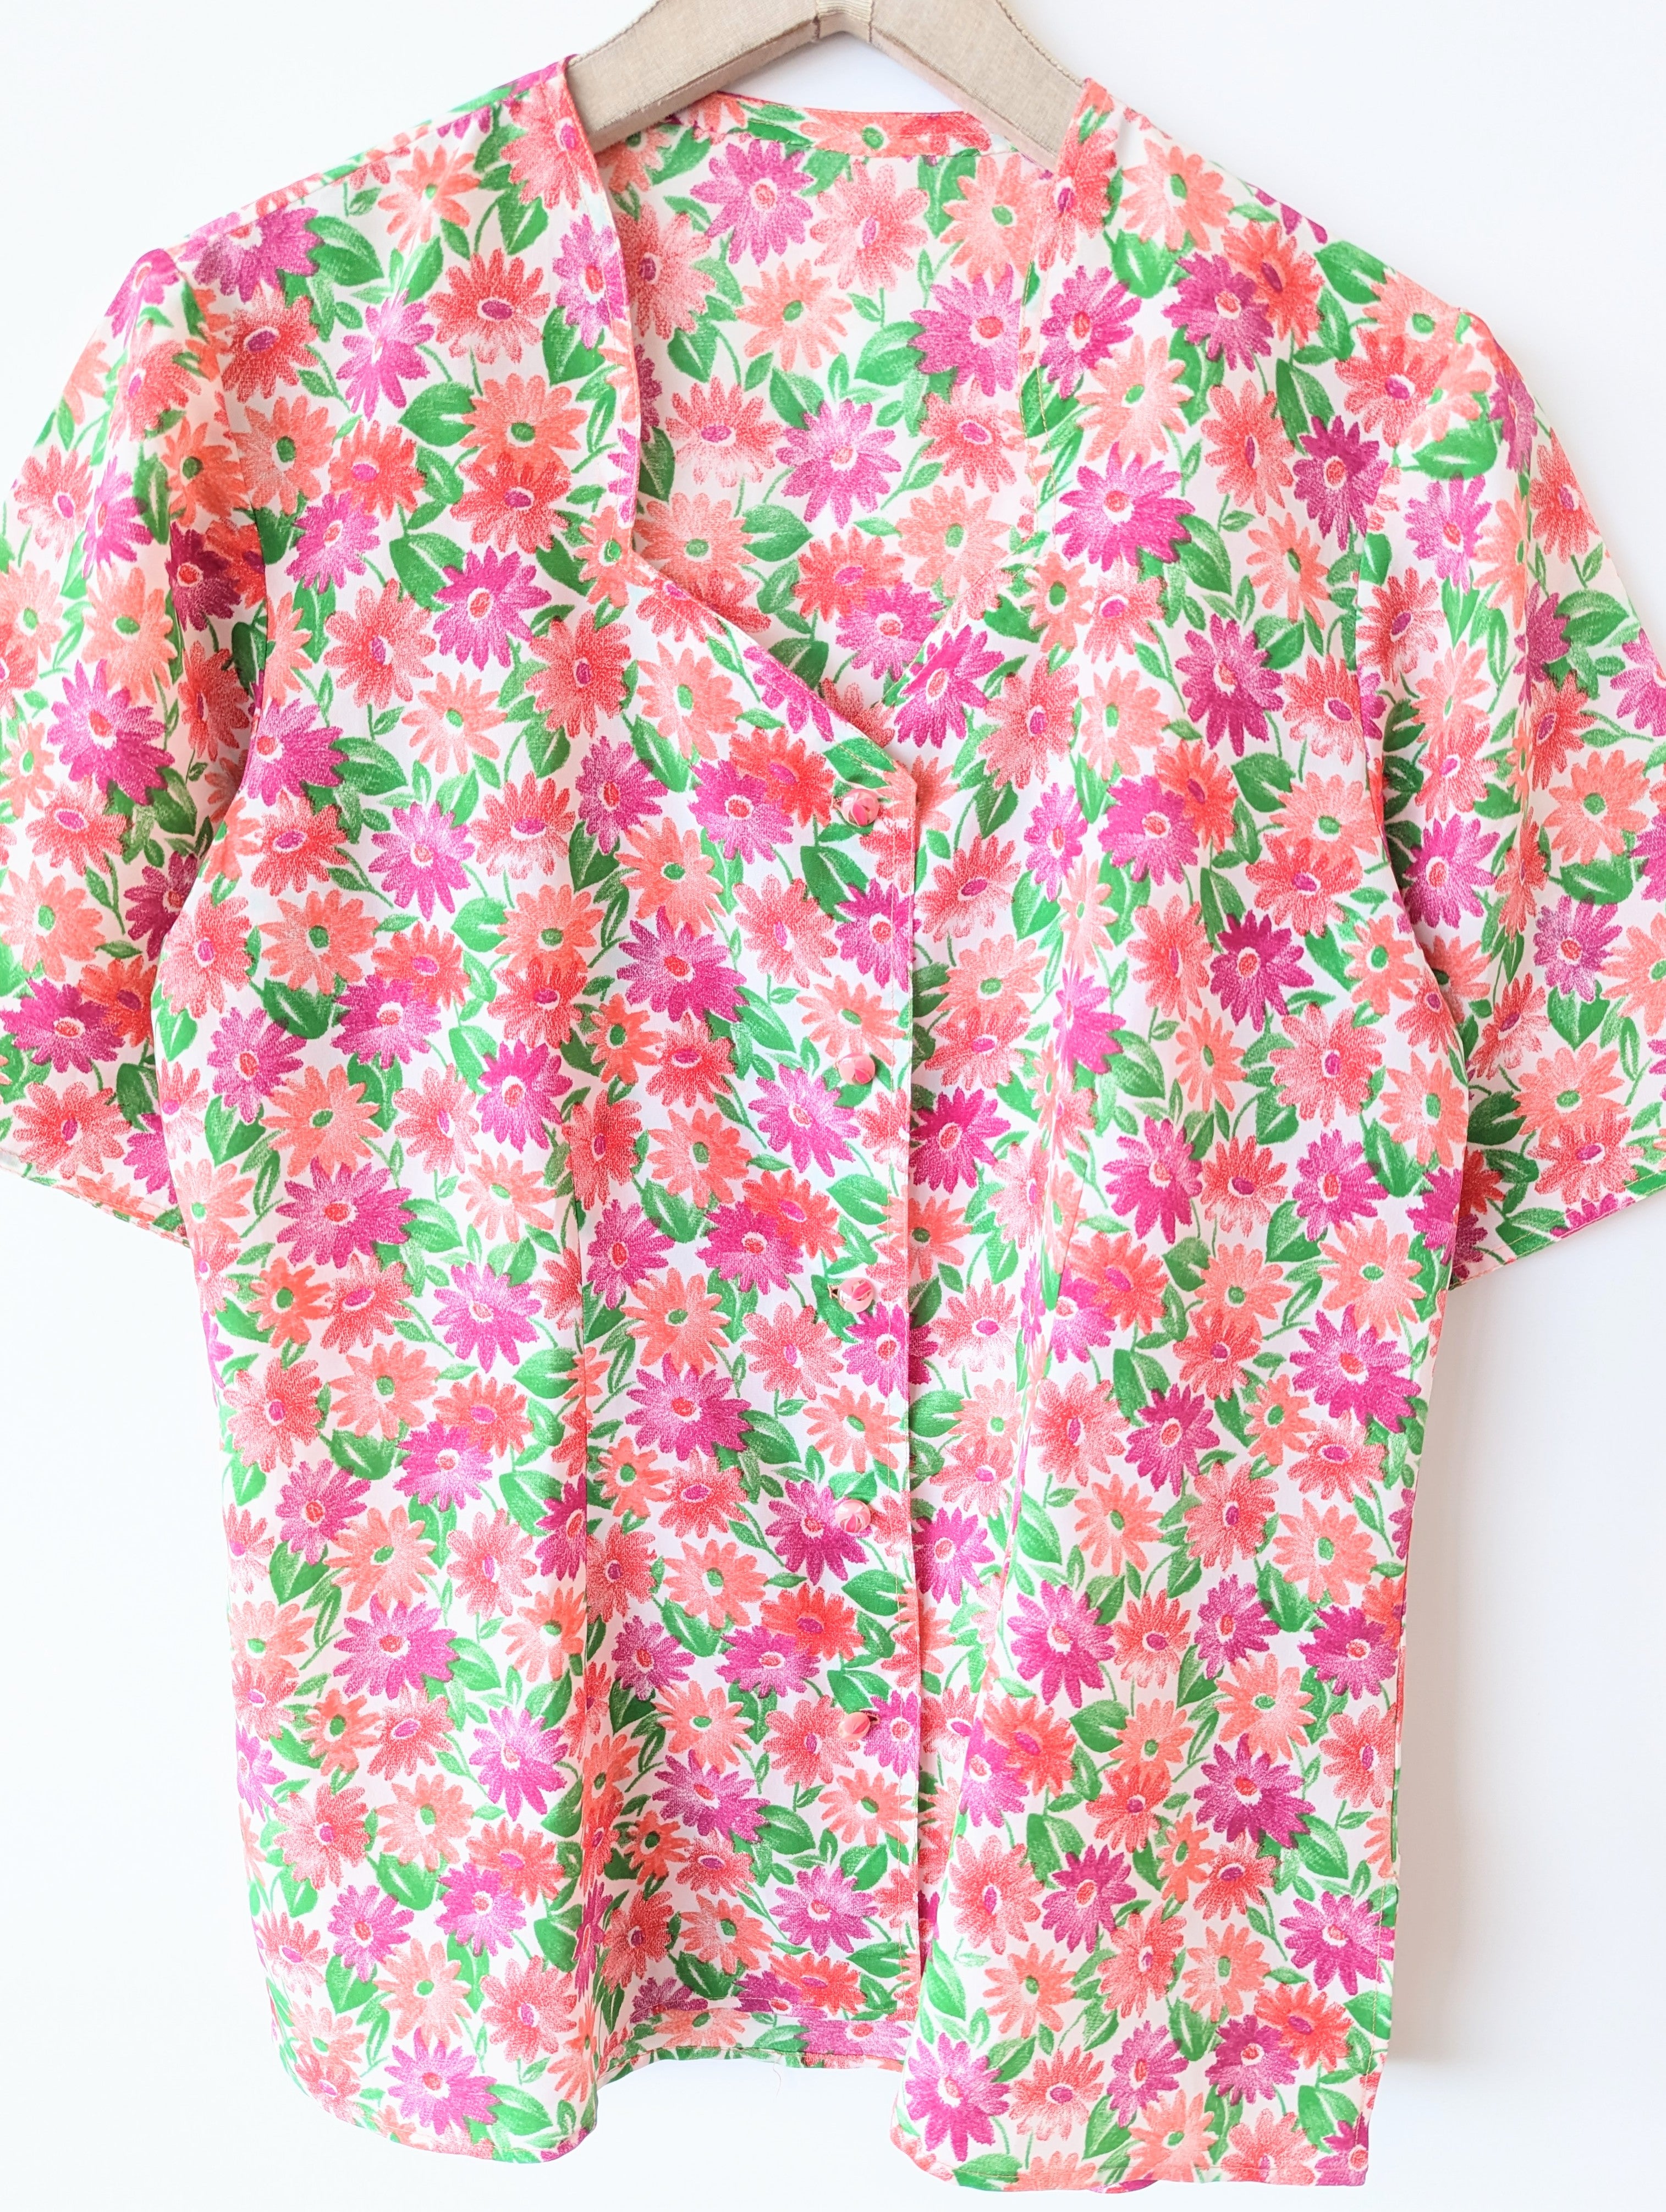 *Handmade* Bluse 80s Blumen Print Pink Heavin (L-XL)